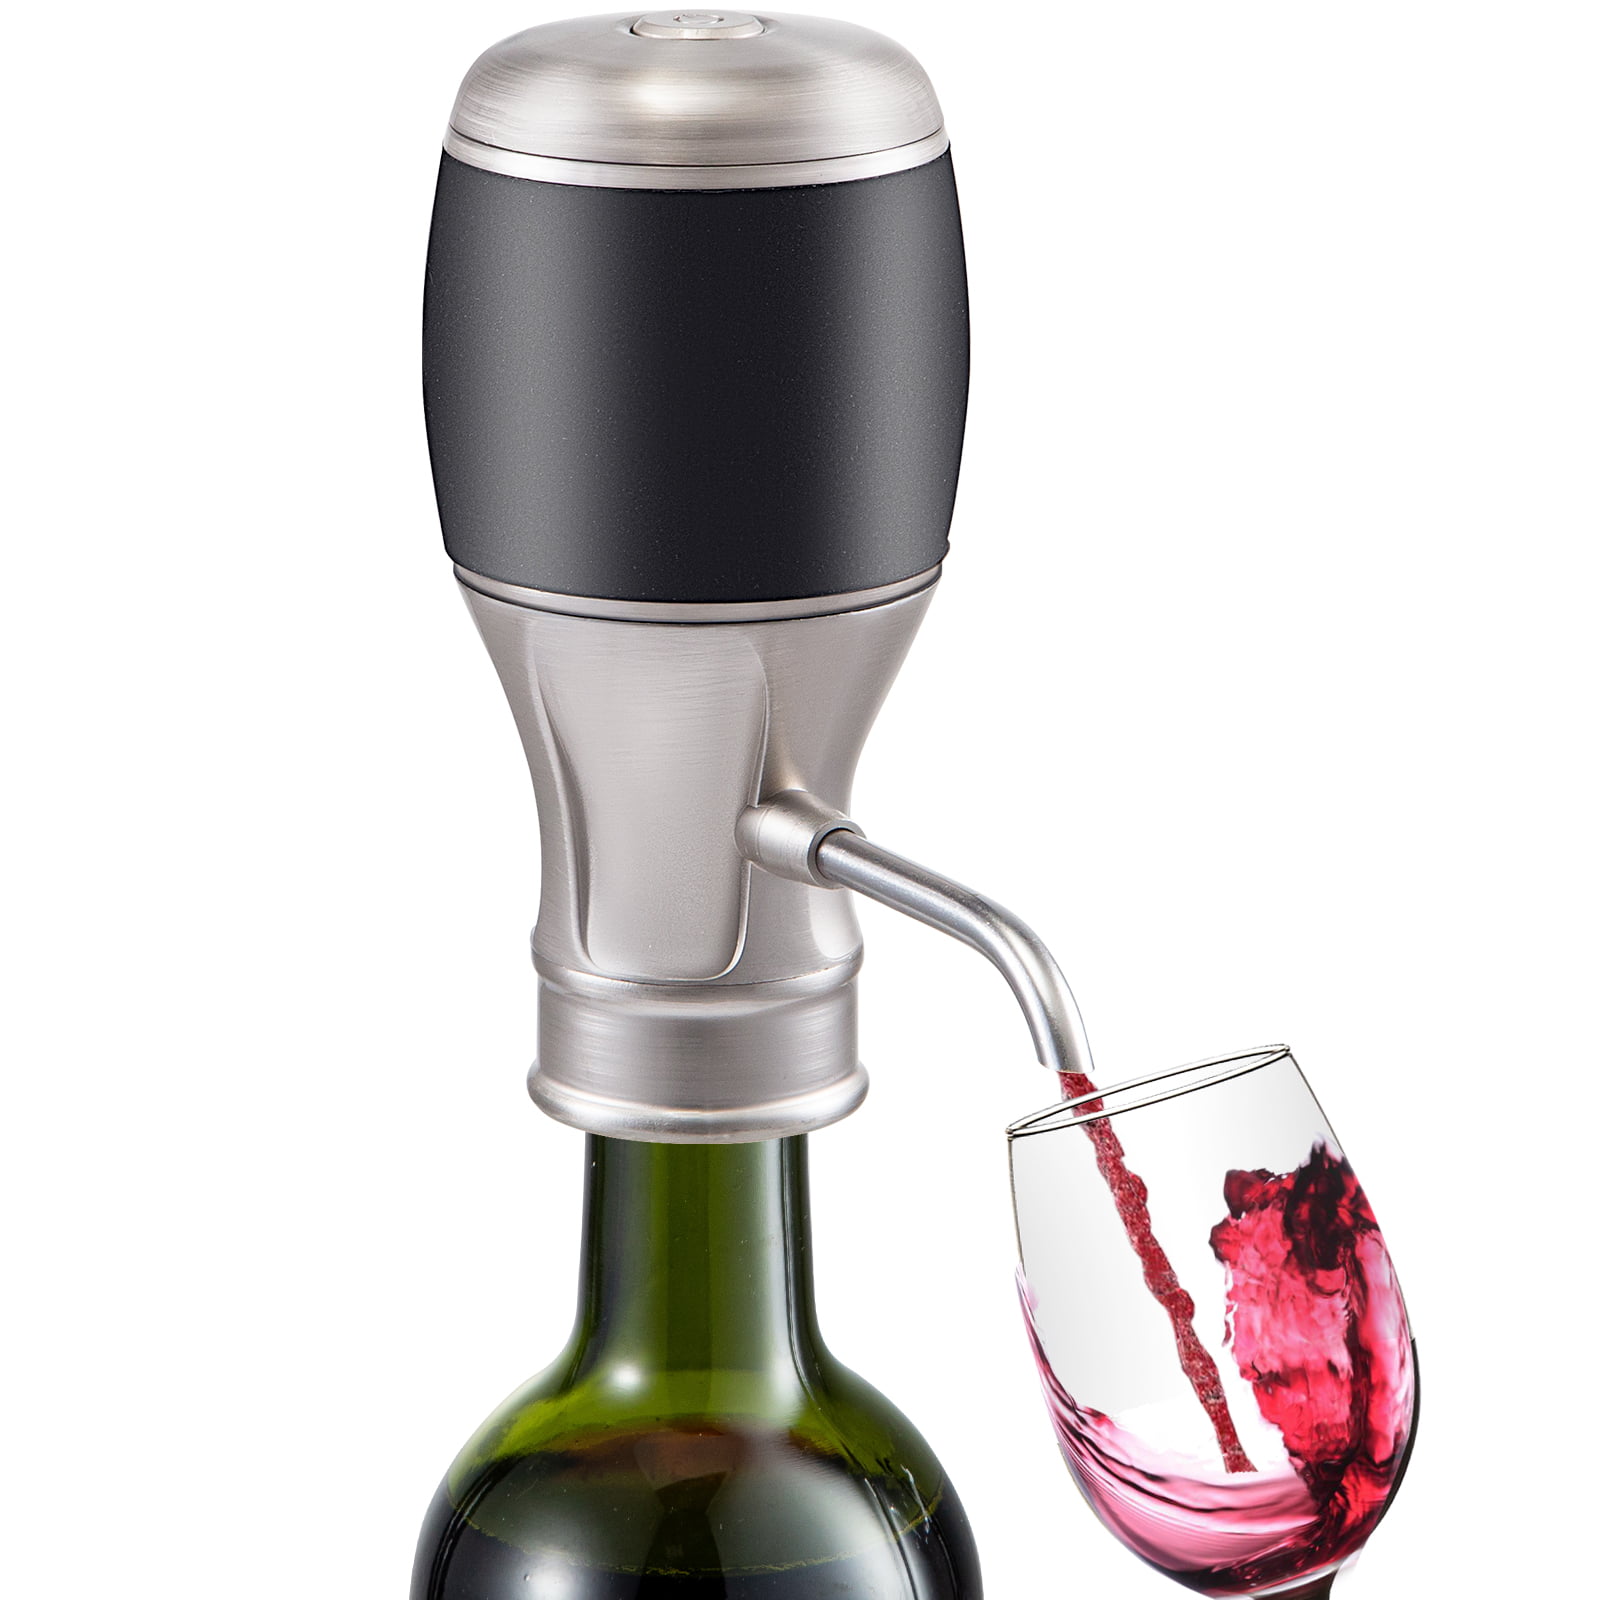 Red Wine Bottle Aerator Decanter Aerating Pourer Spout Bar Accessory Set  V!